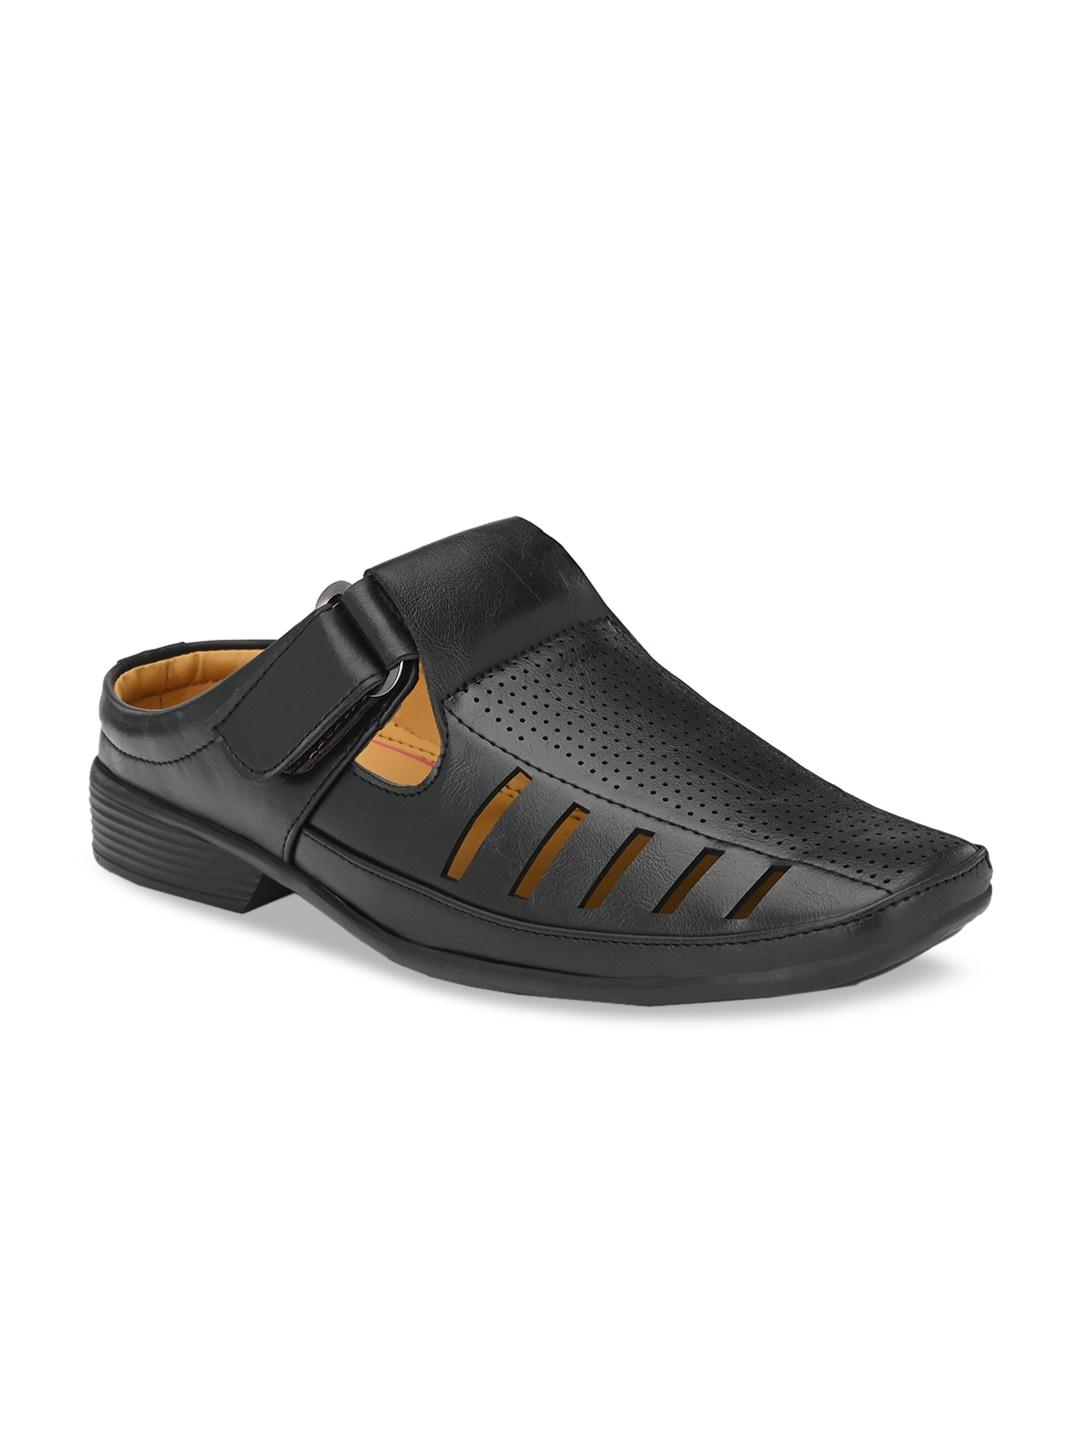 azzaro-black-men-black-shoe-style-sandals